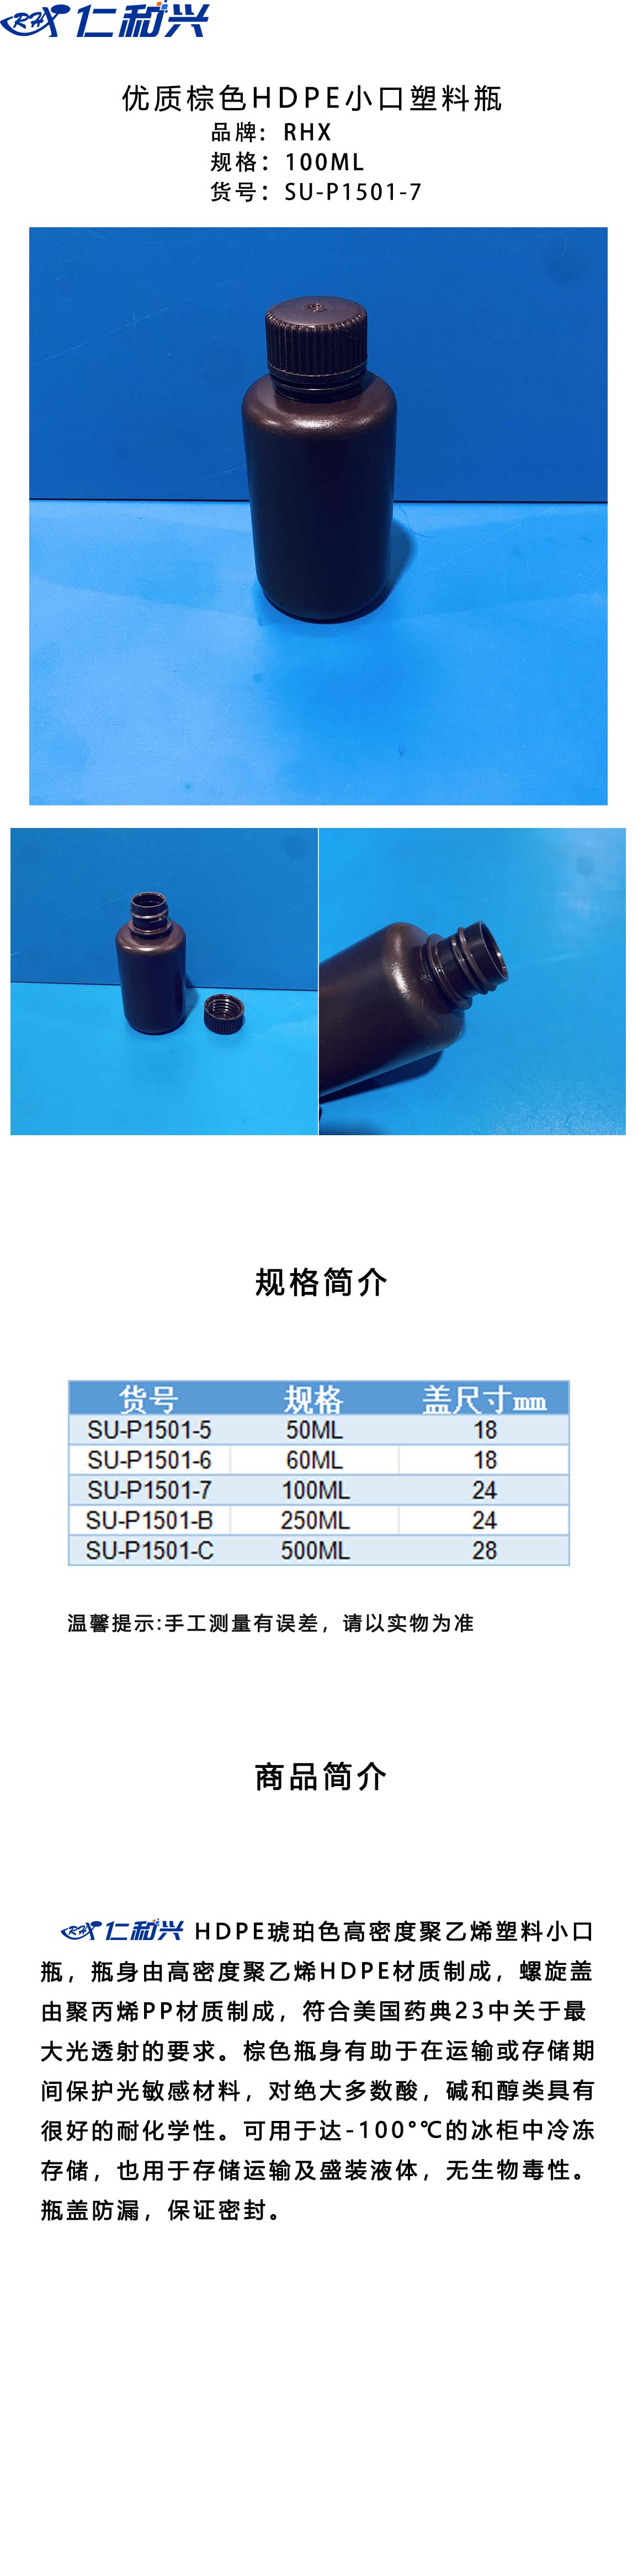 SU-P1501-7 棕色HDPE 小口塑料瓶 长图模板.jpg